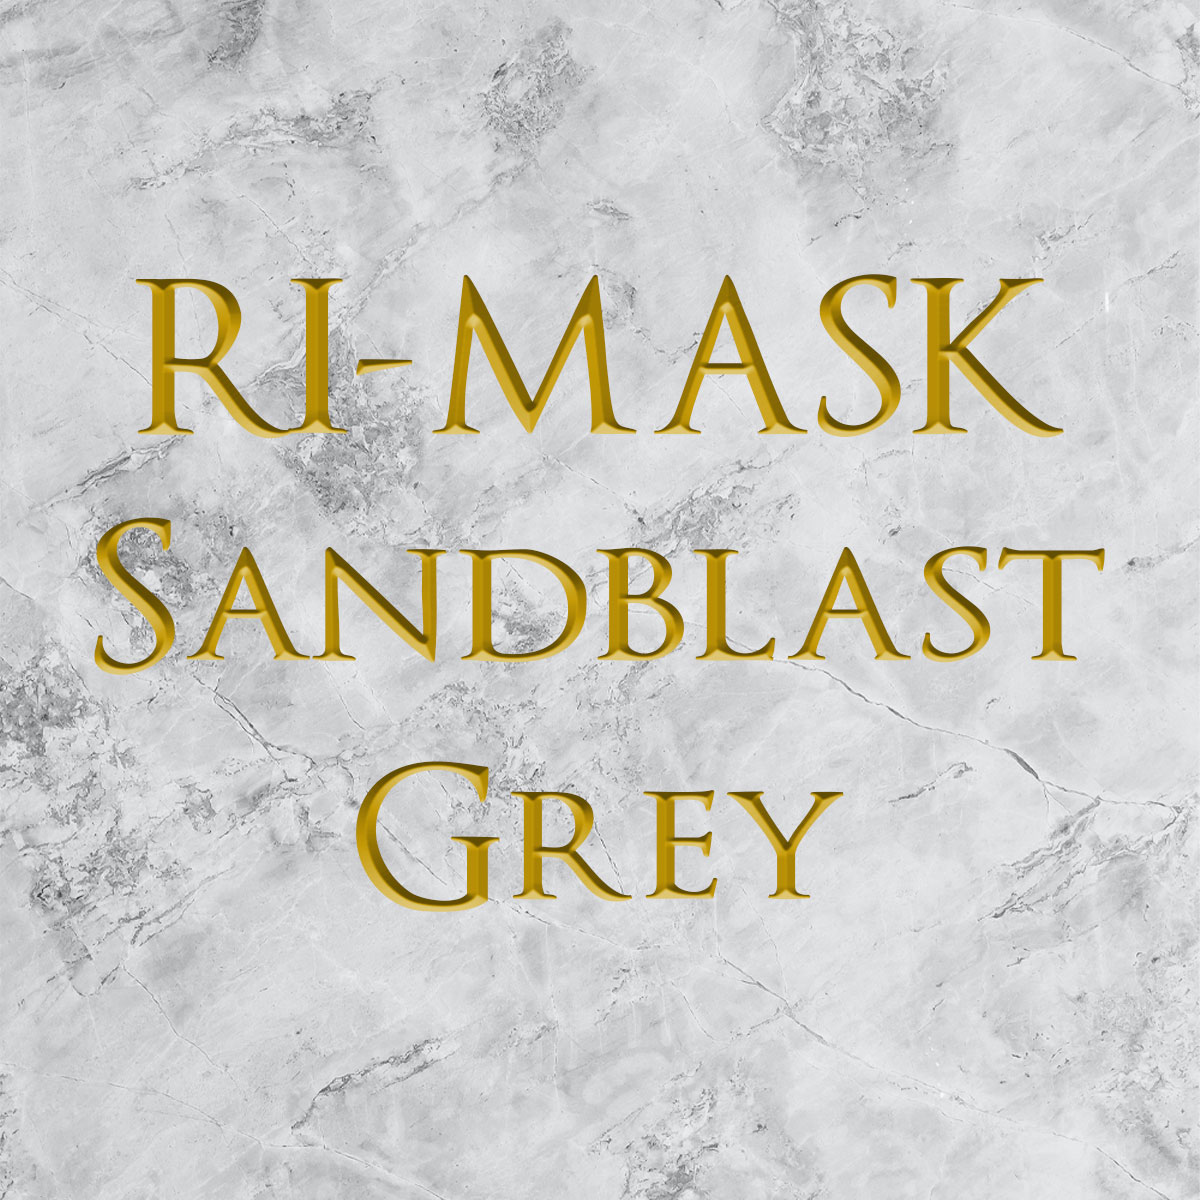 ri-mask sandblast